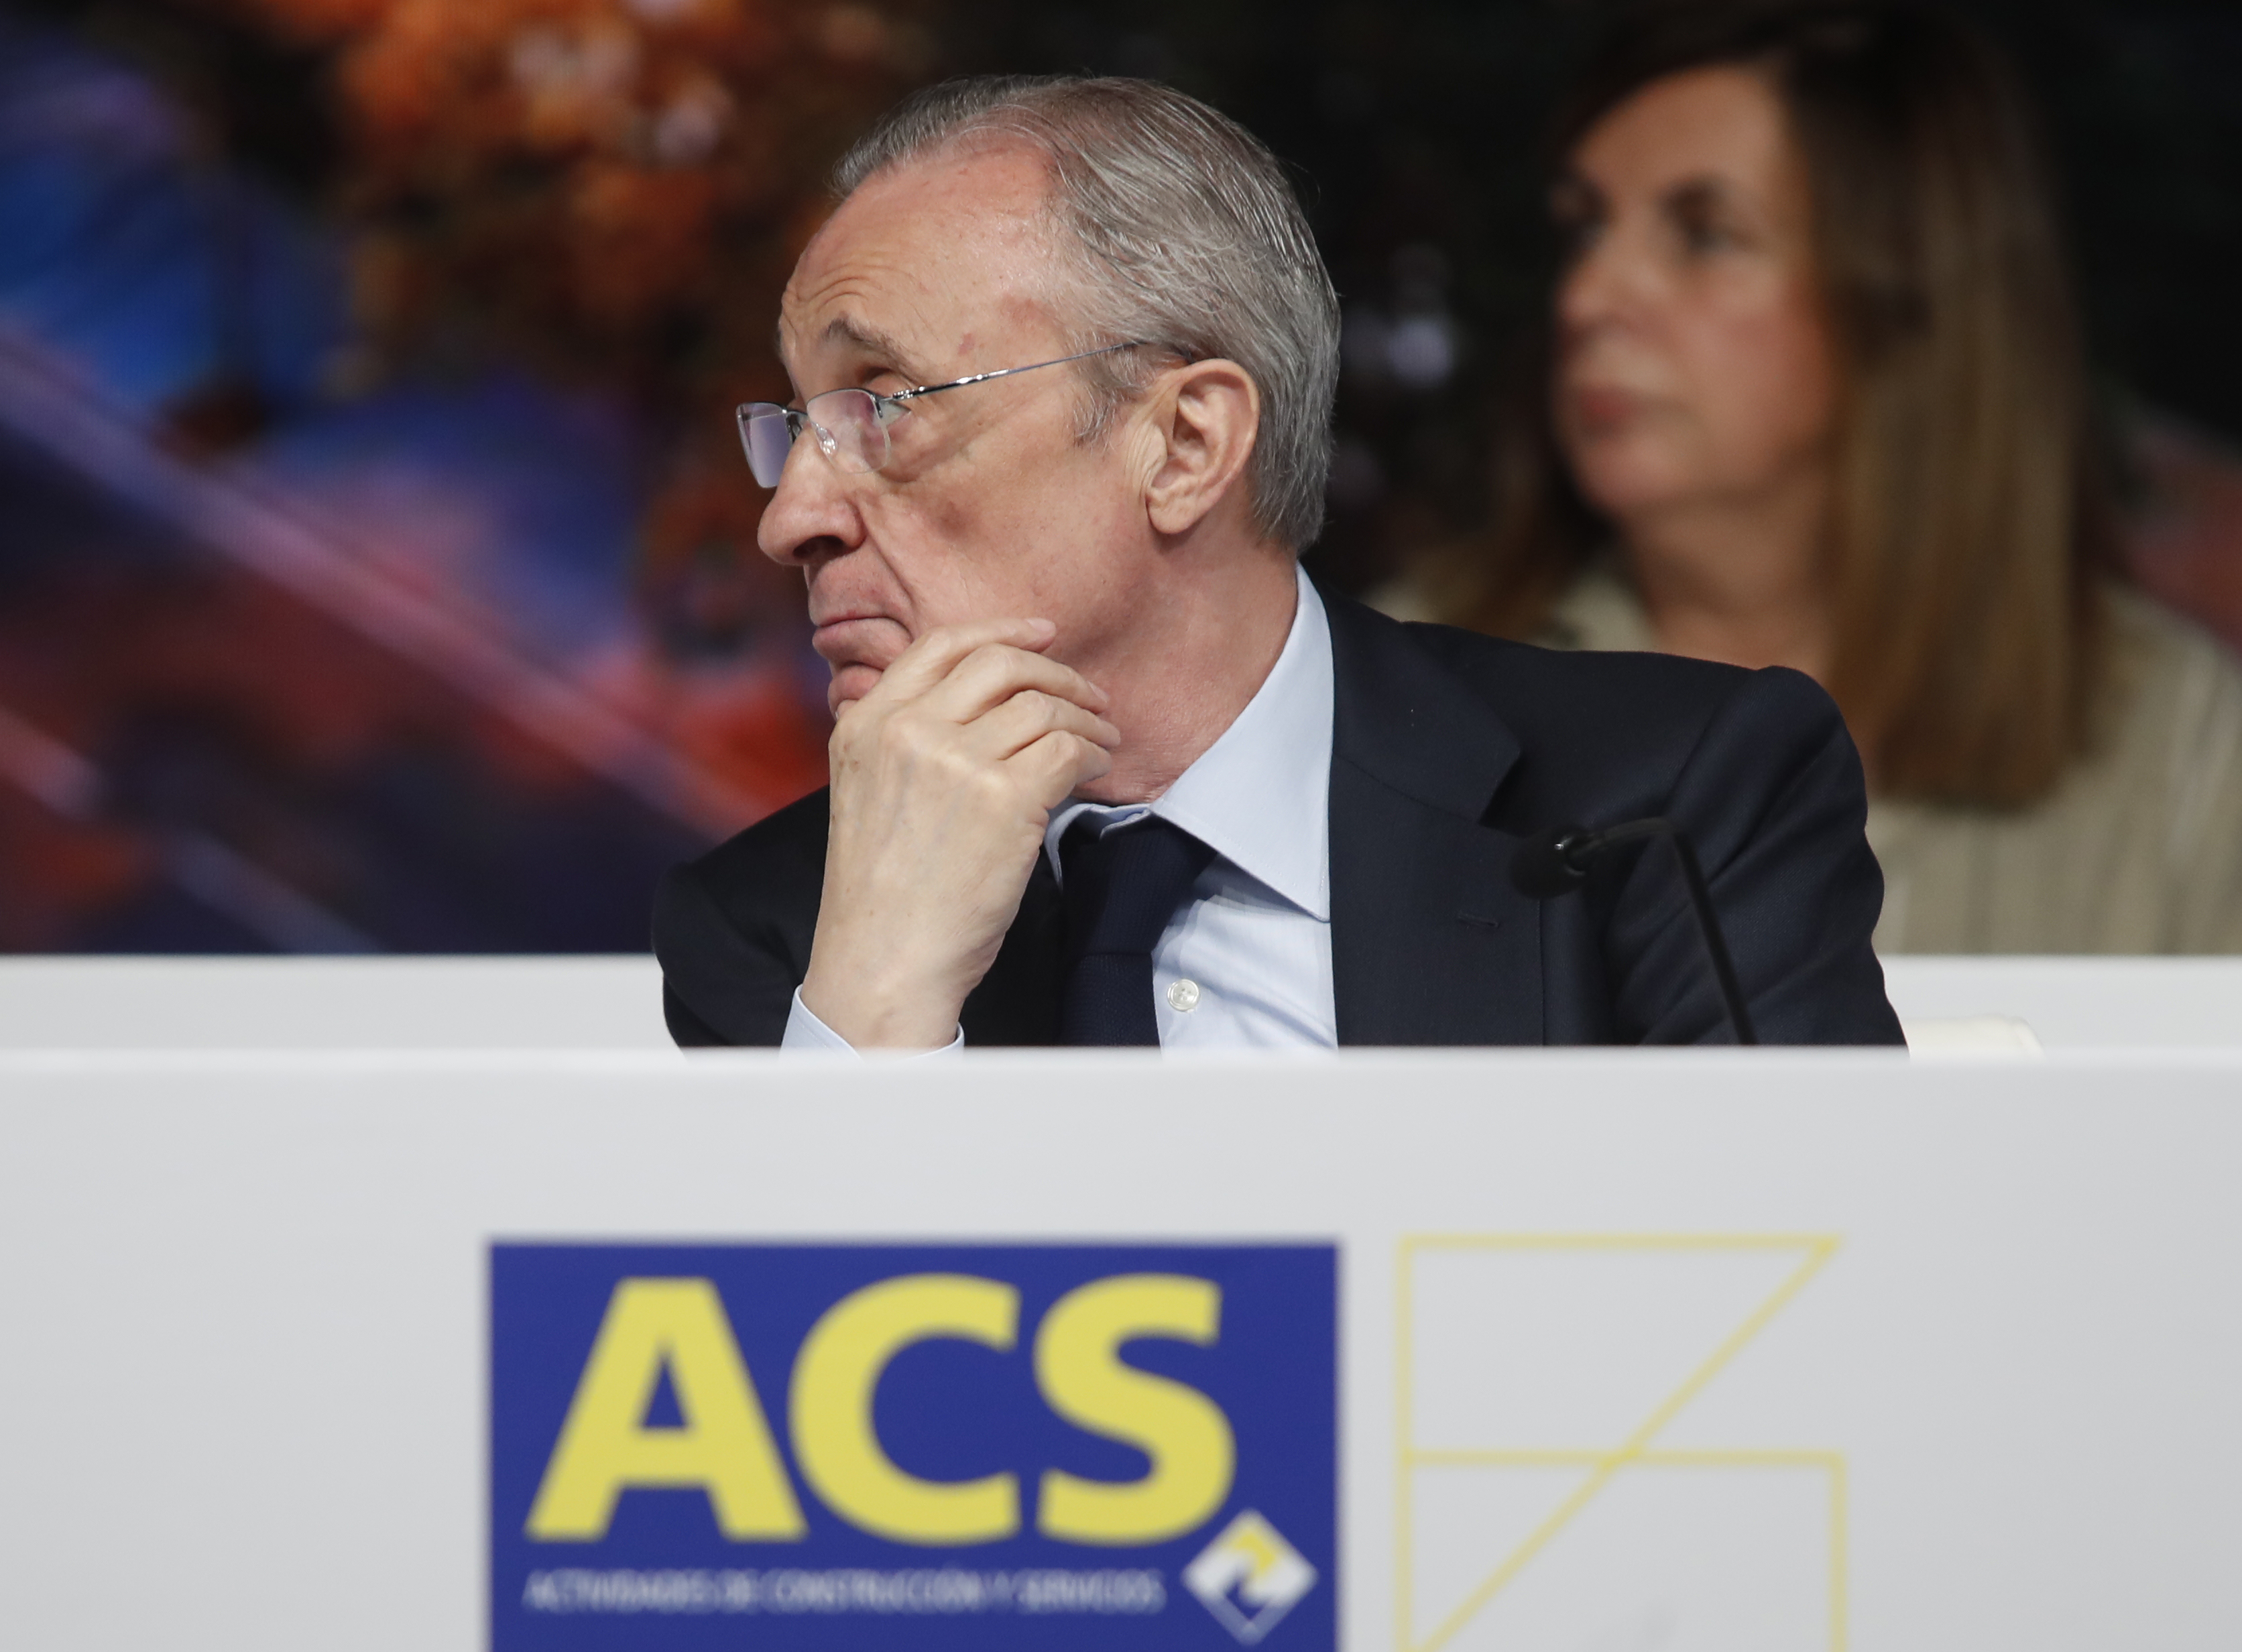 ACS Florentino pérez